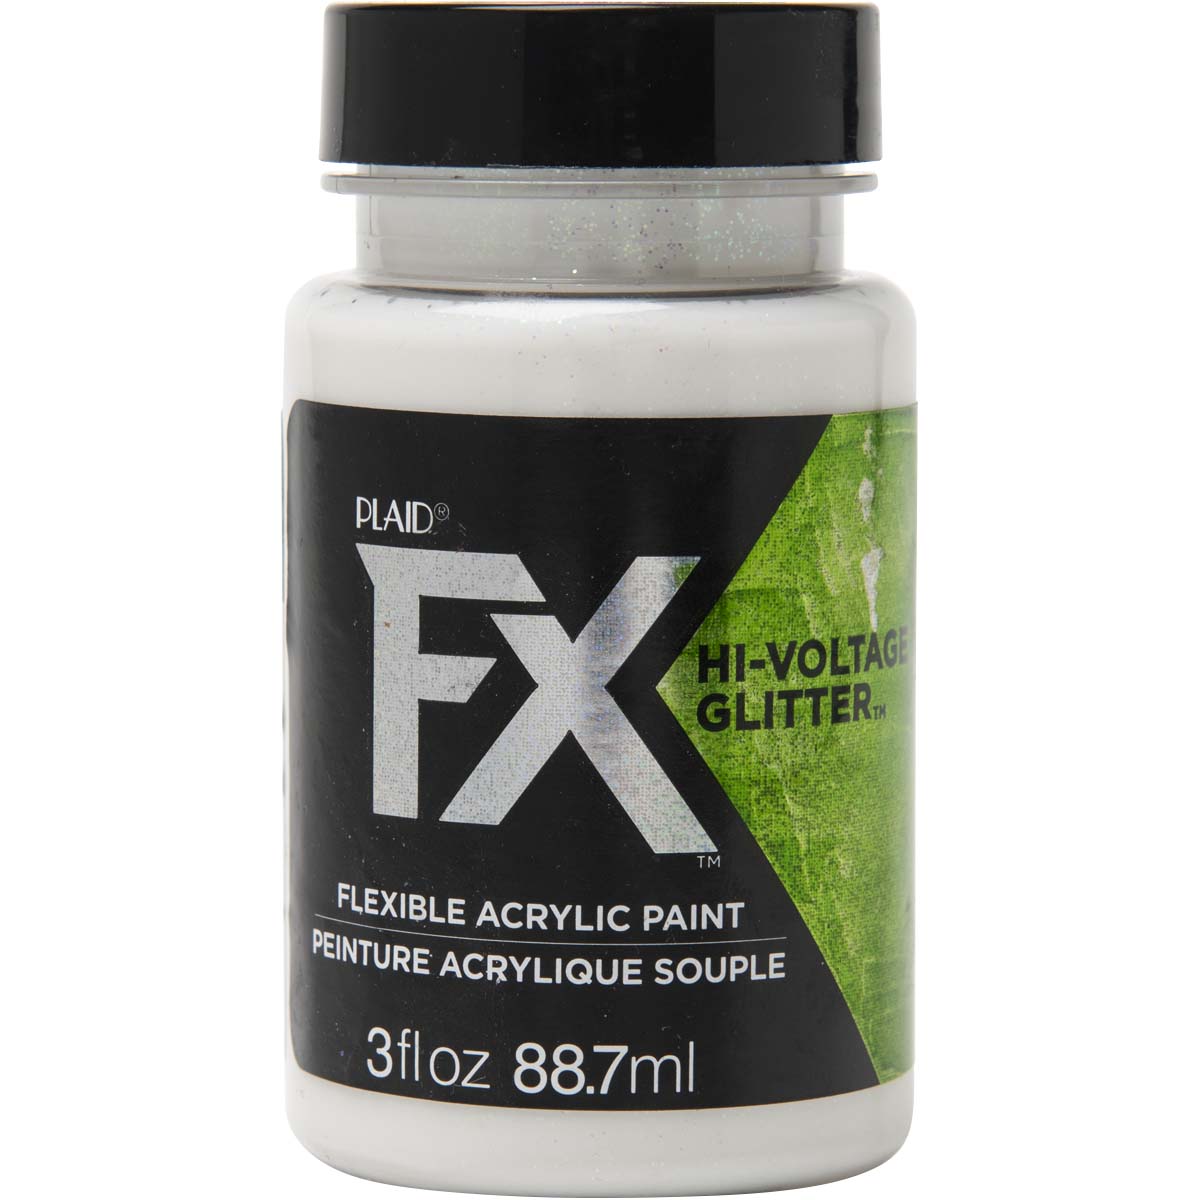 PlaidFX Hi-Voltage Glitter Flexible Acrylic Paint - Green Shift, 3 oz. - 36903